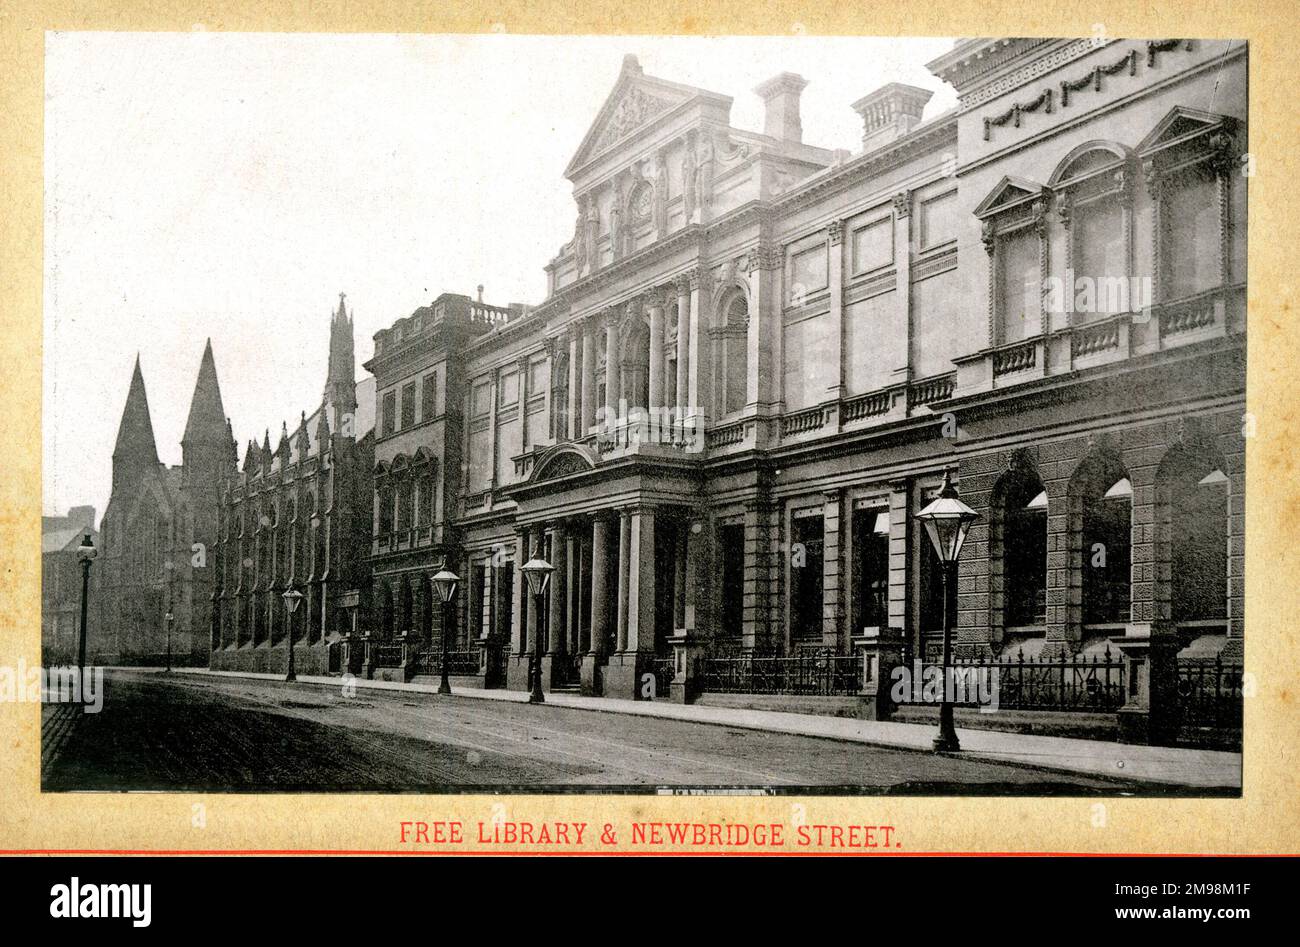 Newcastle upon Tyne - Biblioteca gratuita e Newbridge Street. Foto Stock